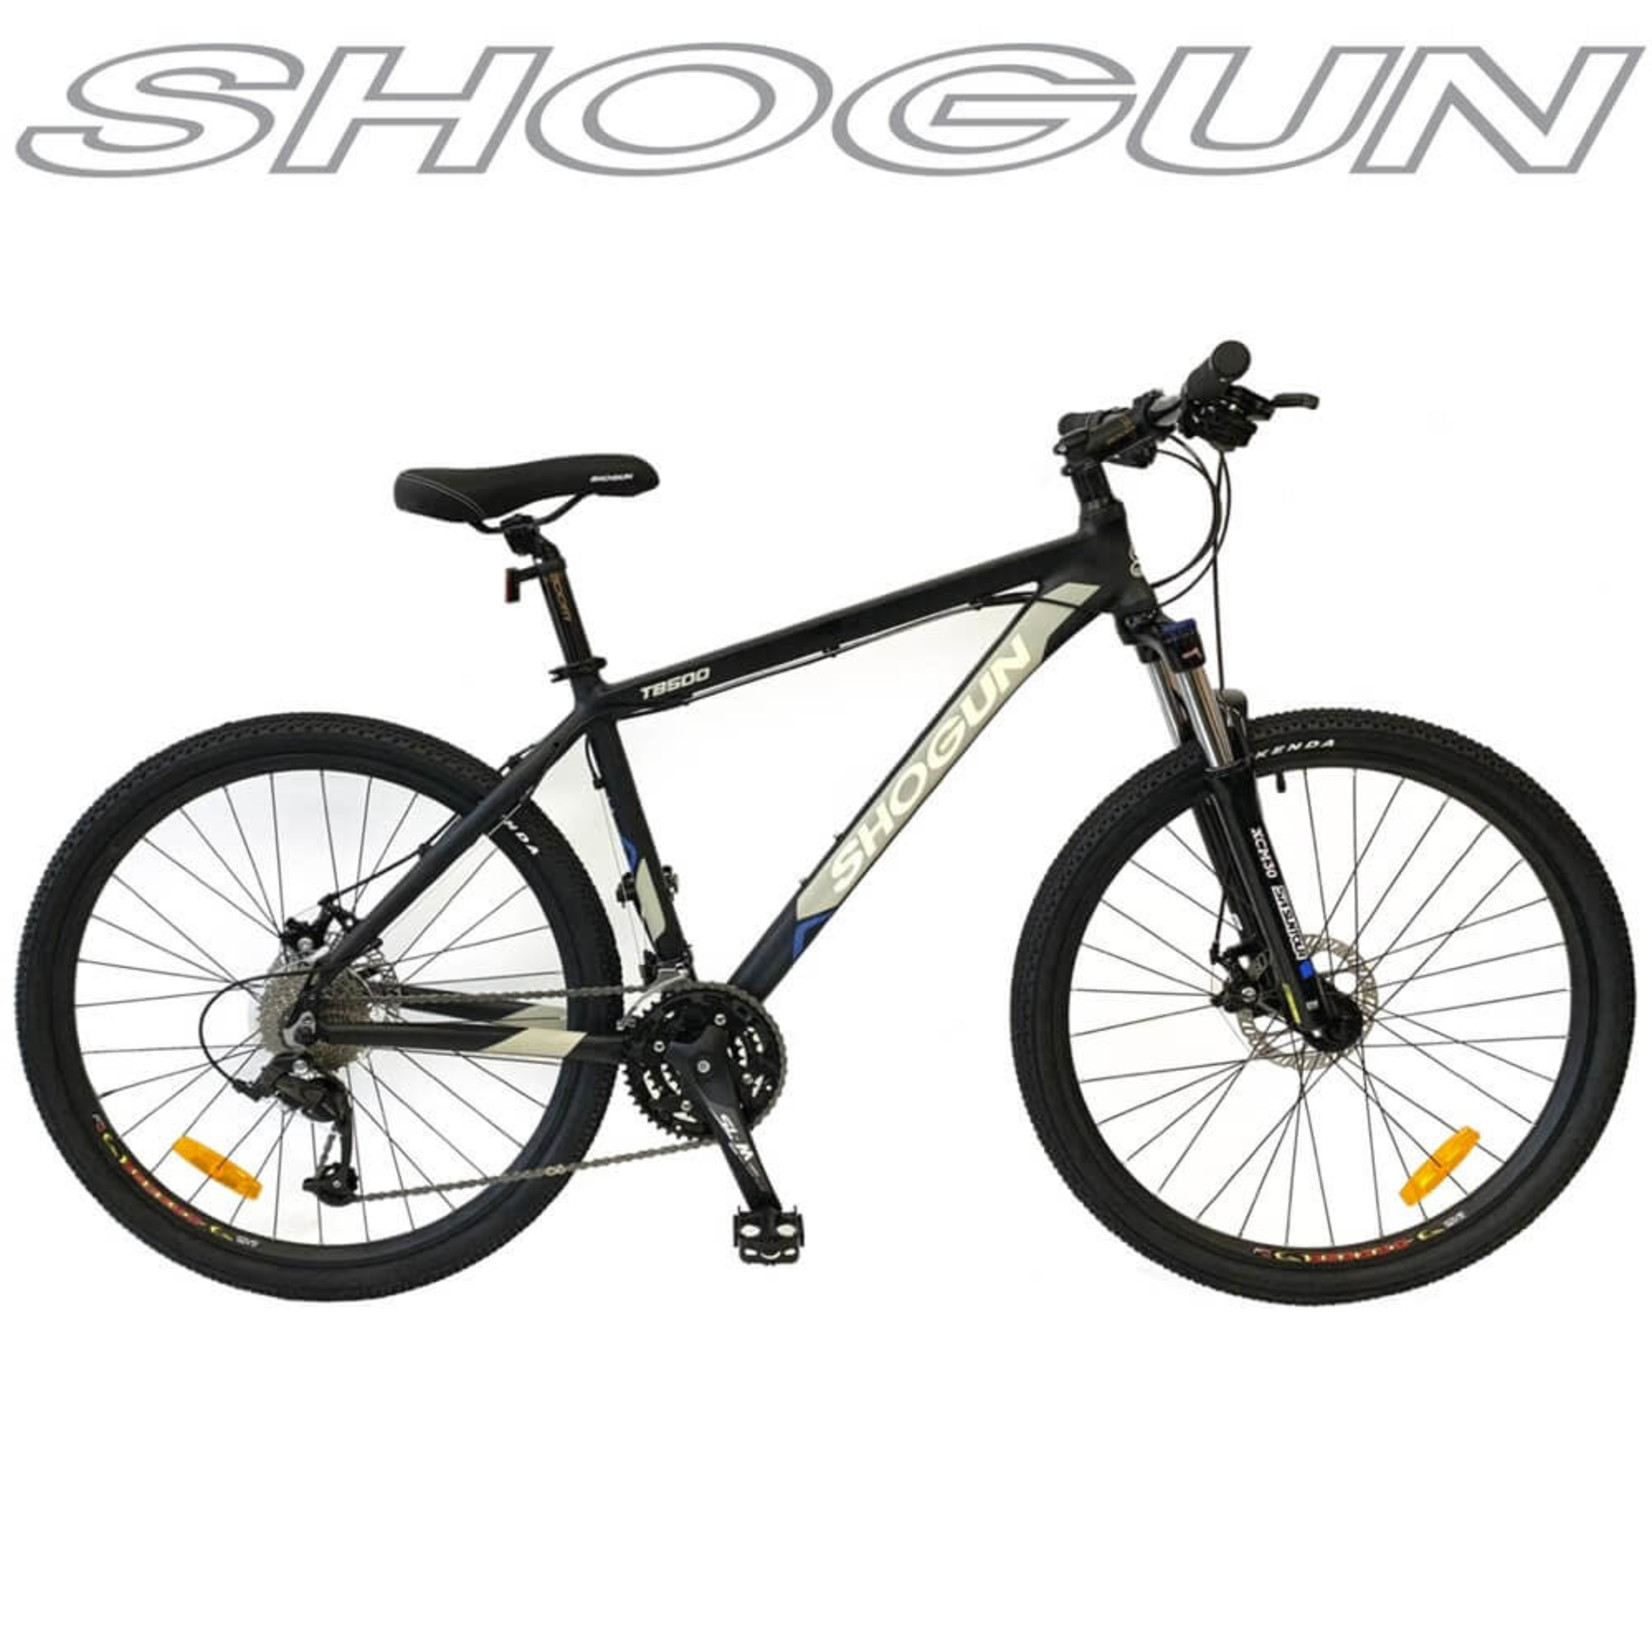 Shogun SHOGUN Mountain Bike TB500 Series